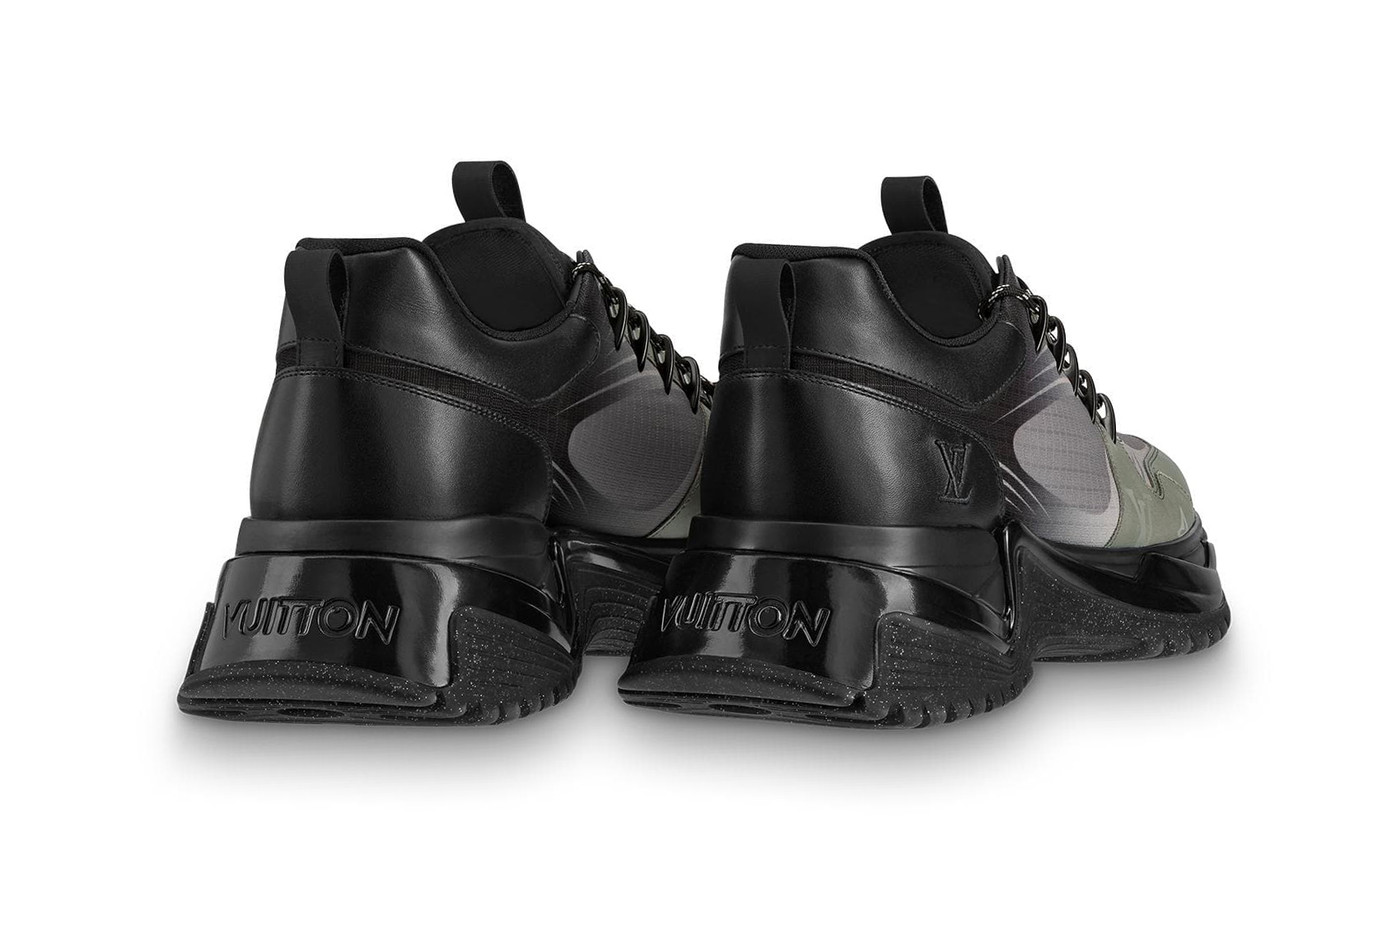 Louis Vuitton Run Away Sneaker - MoreLove